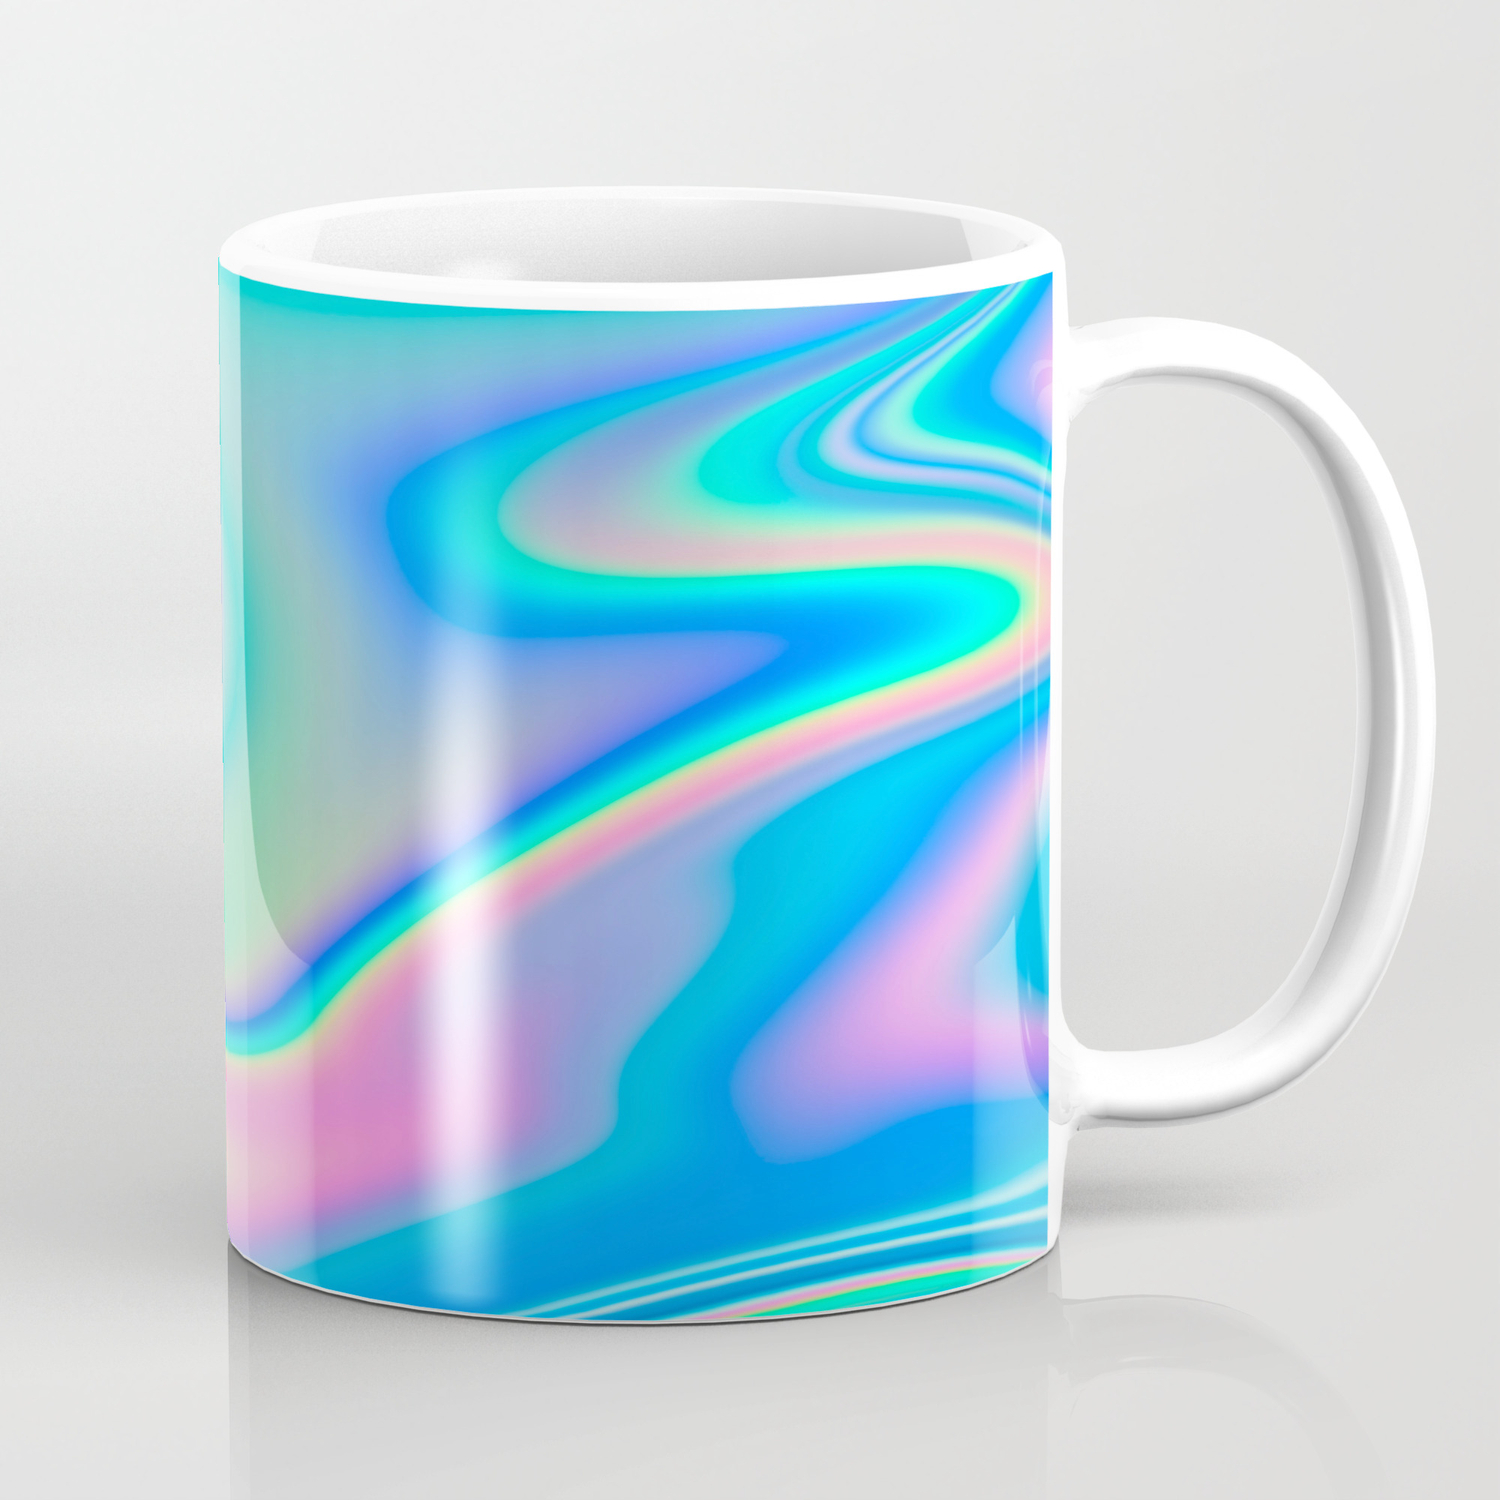 Chill cool vibes coffee mug